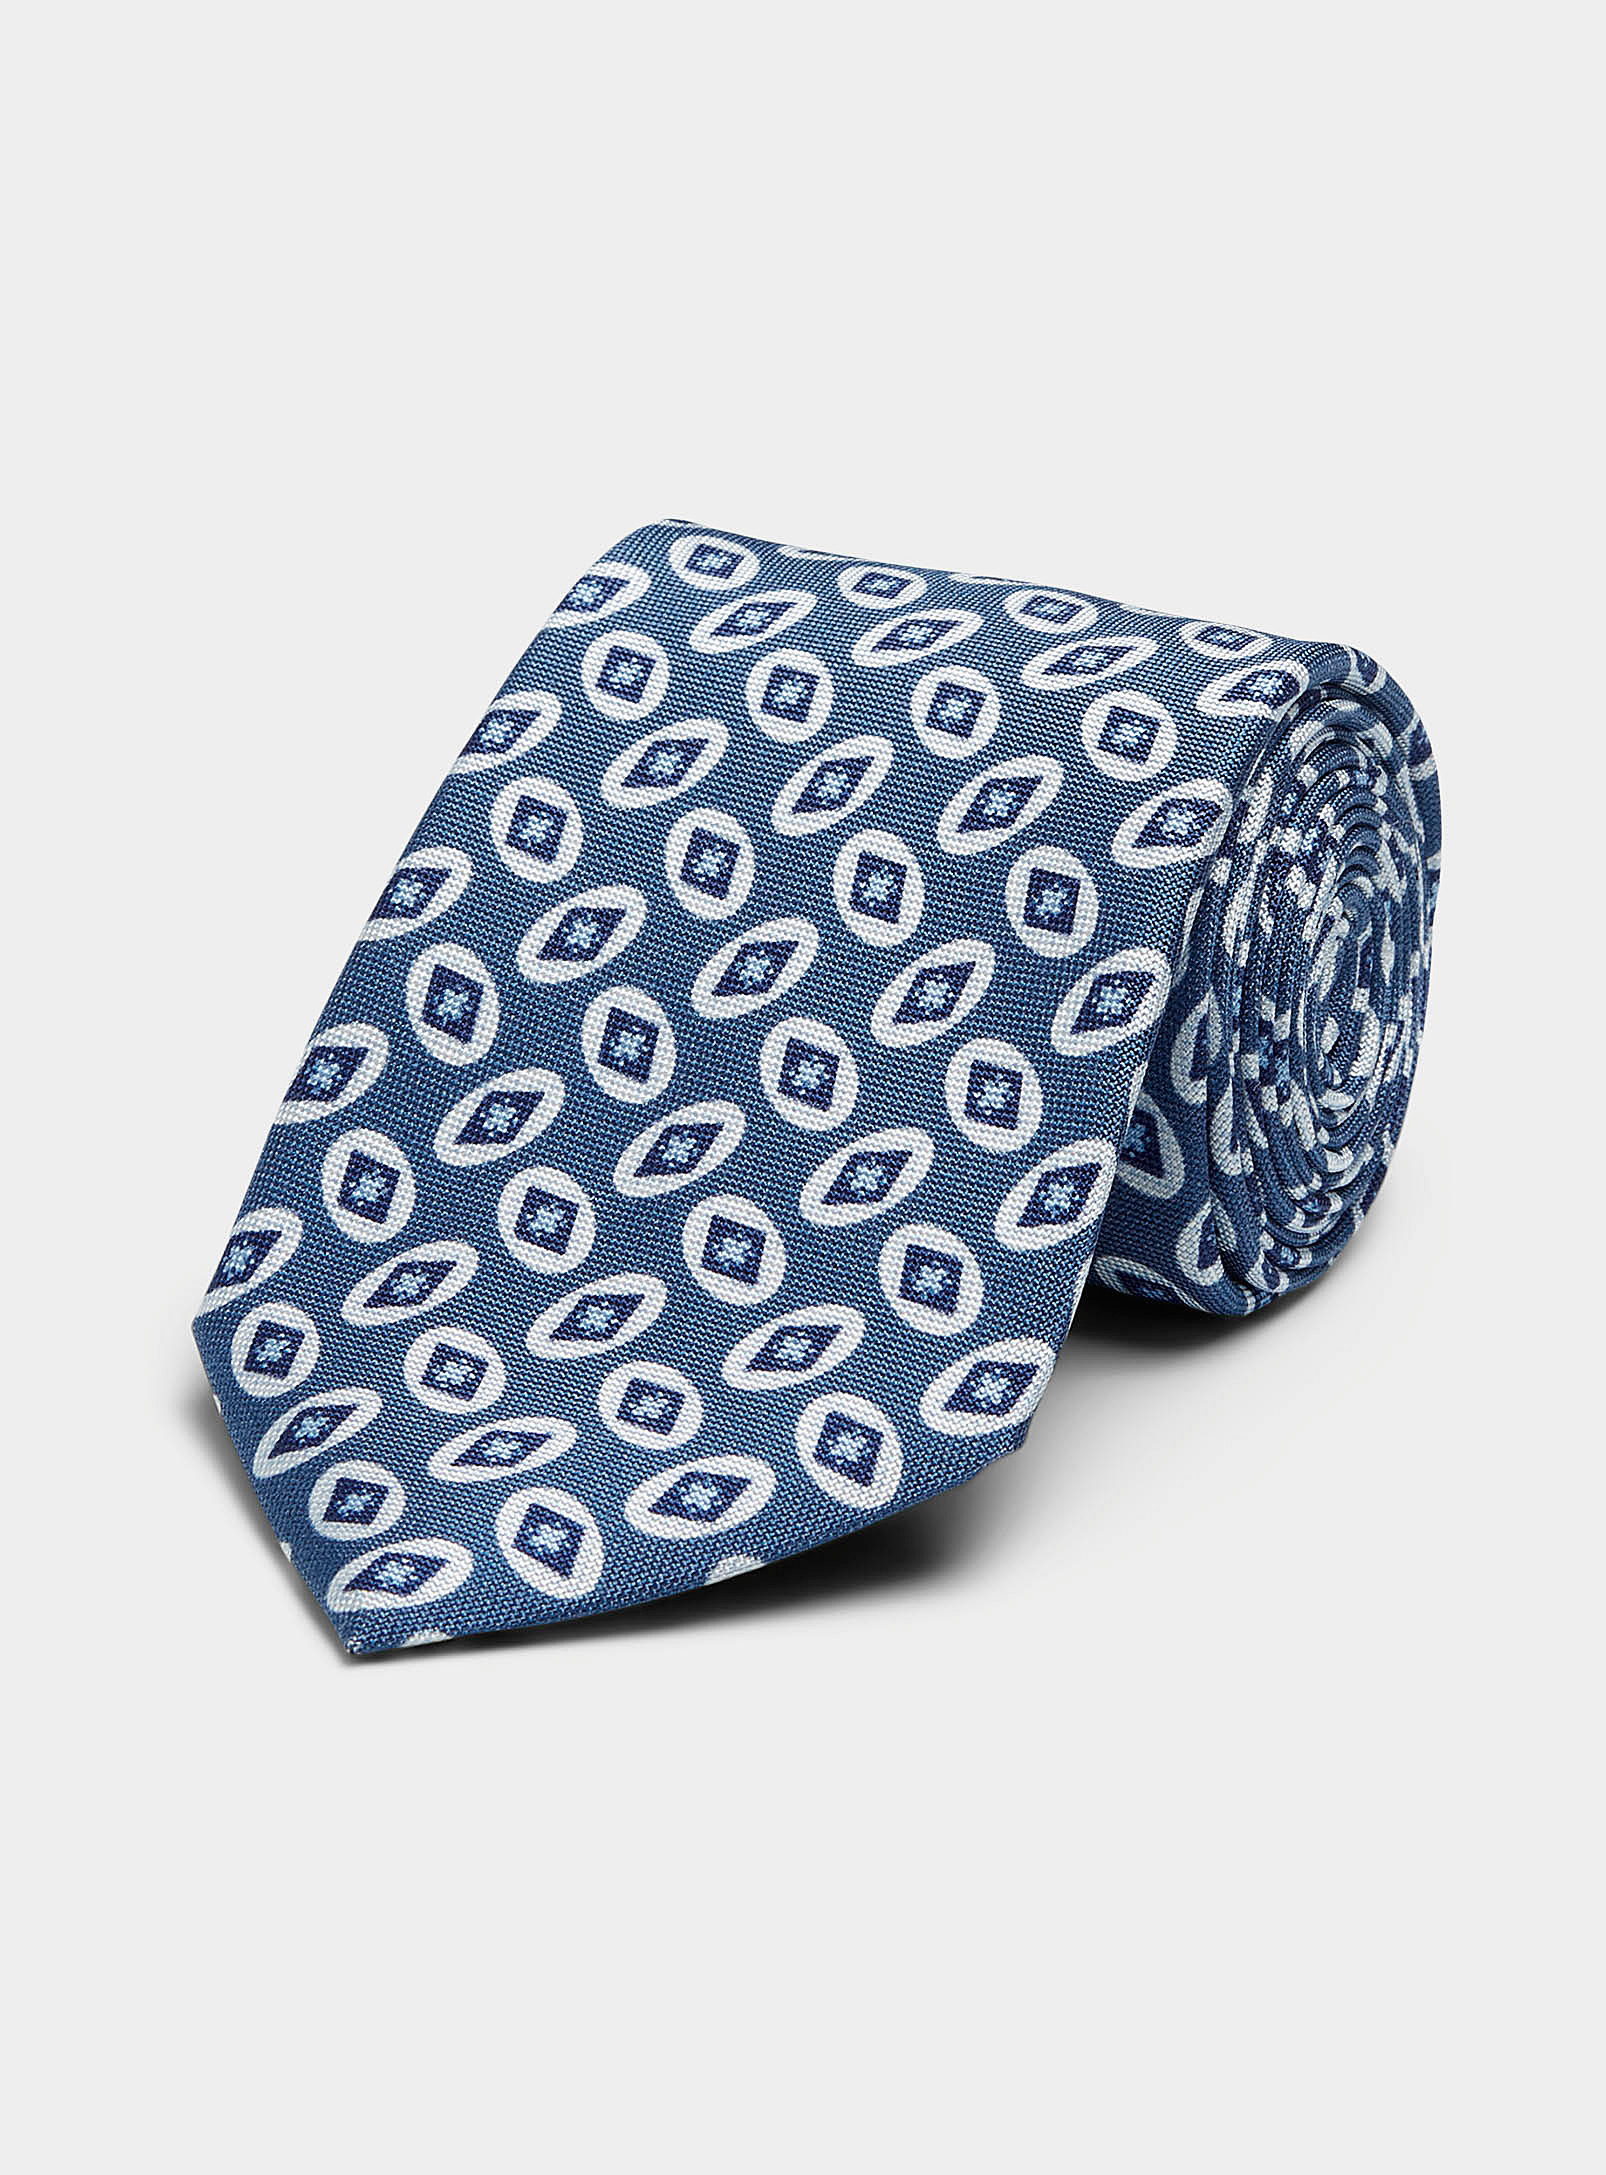 Blick - Men's Geo eye blue tie